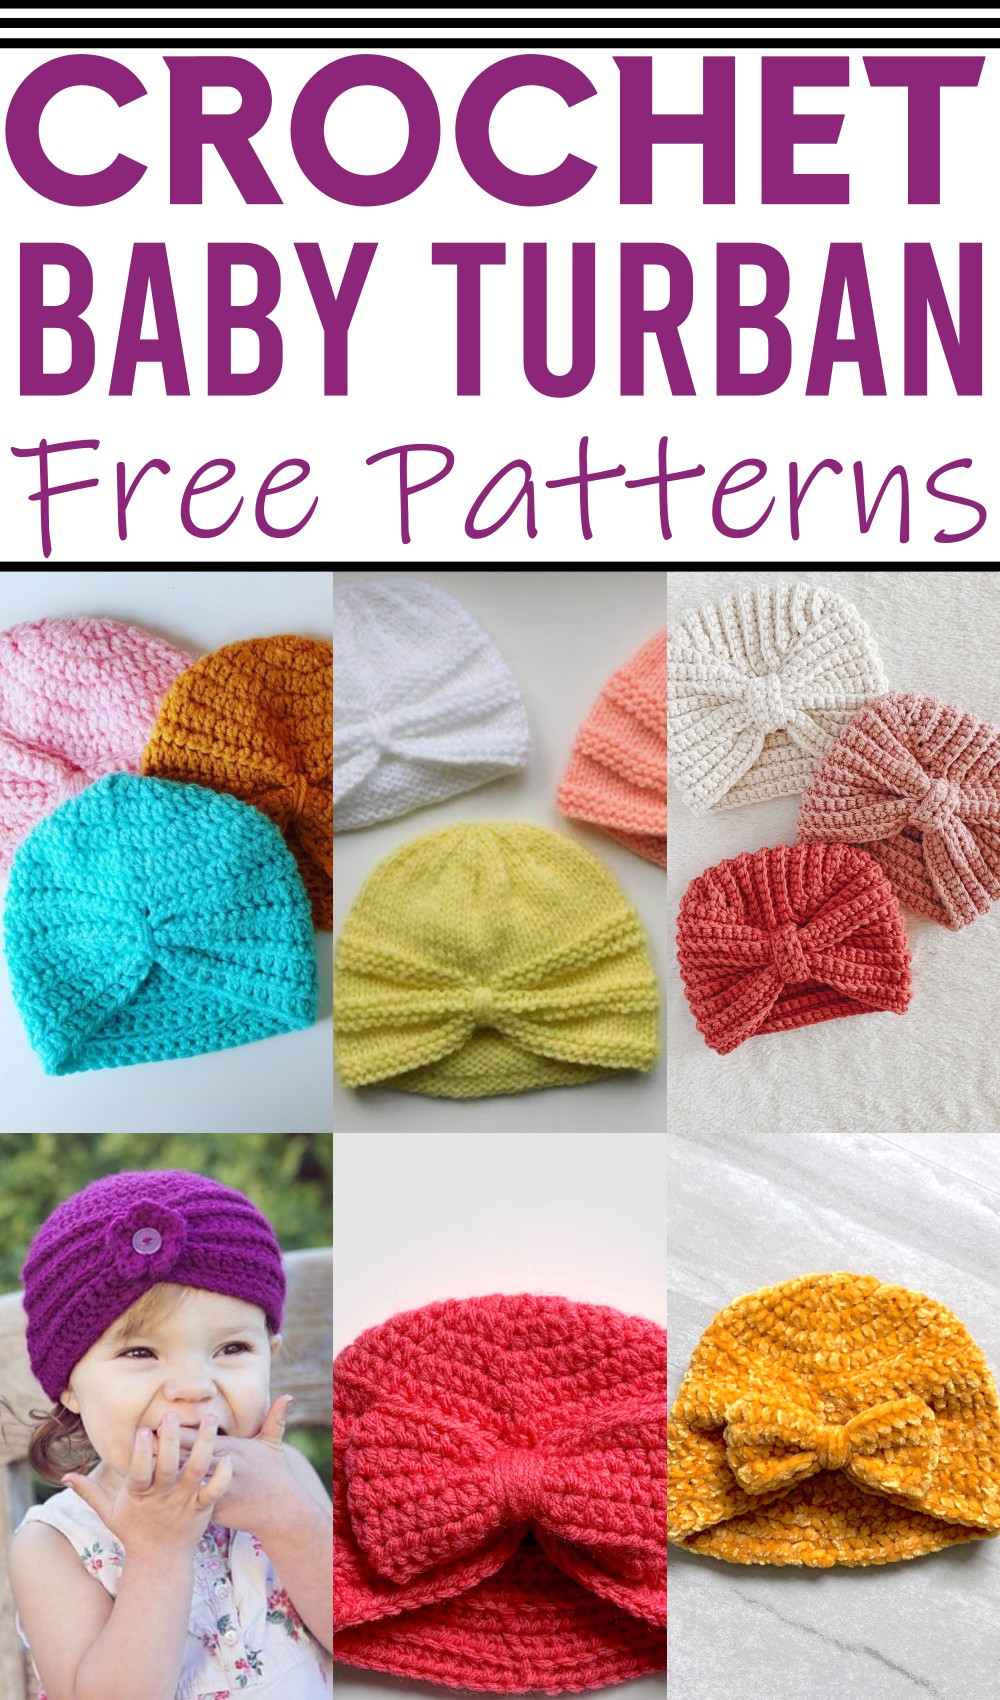 12 Crochet Baby Turban Patterns